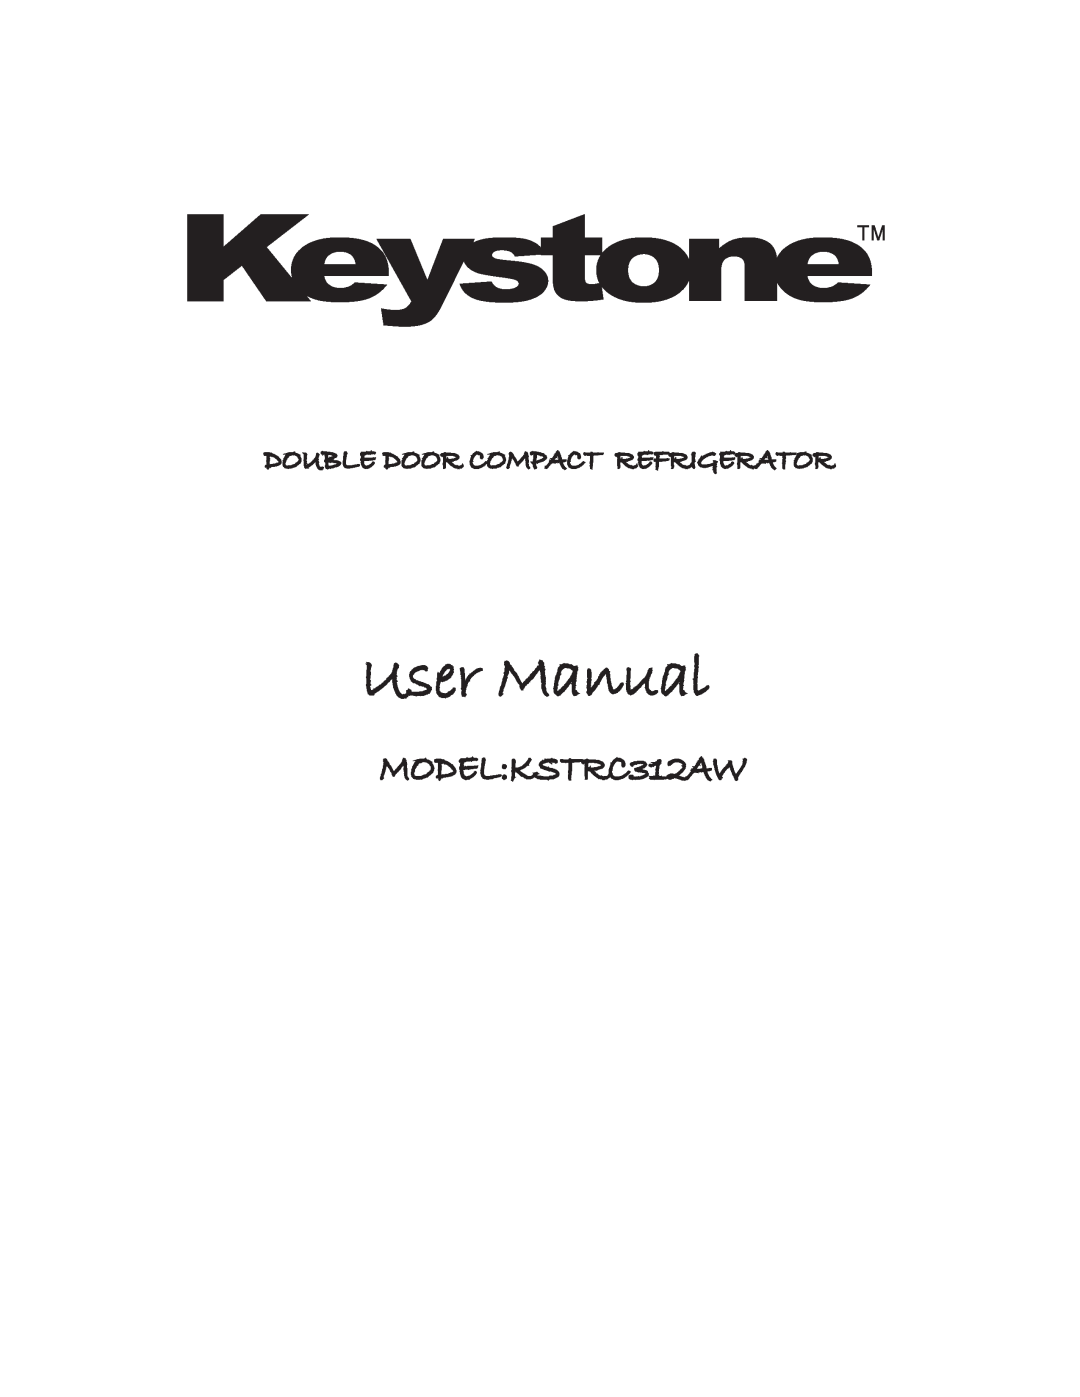 Keystone user manual MODELKSTRC312AW, Double Door Compact Refrigerator 